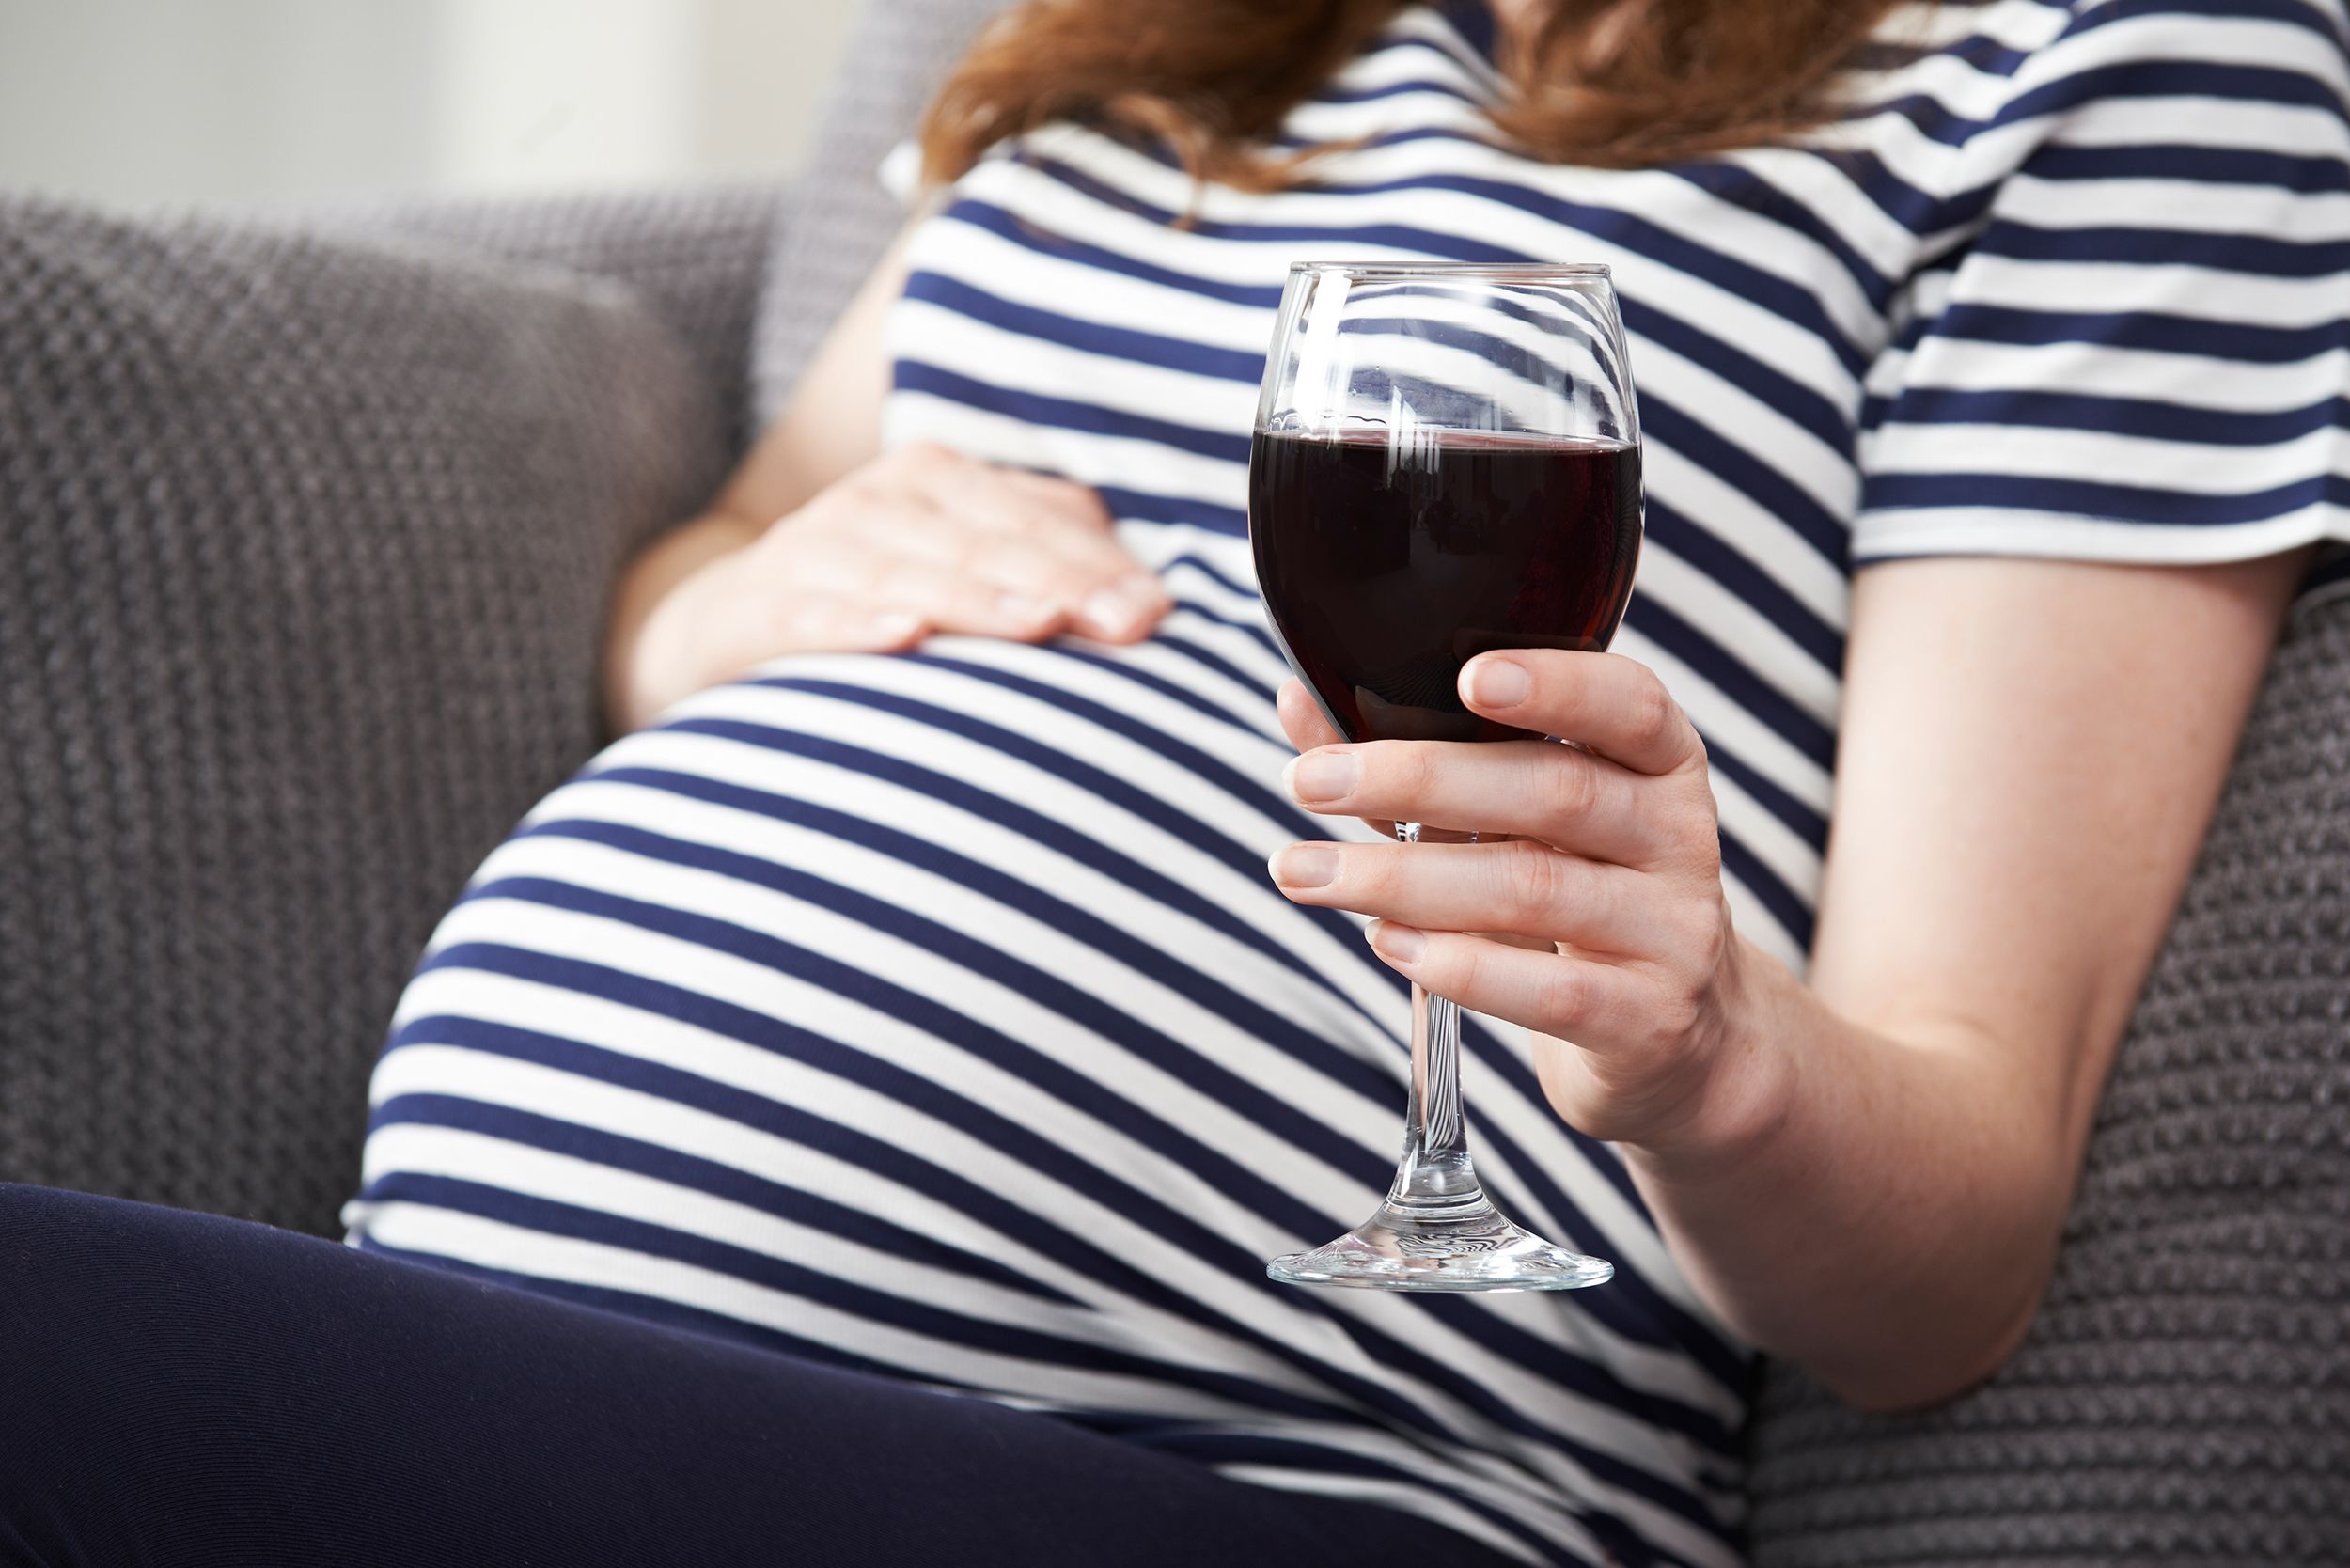 Drinking or smoking while pregnant newborn brain development | CNN